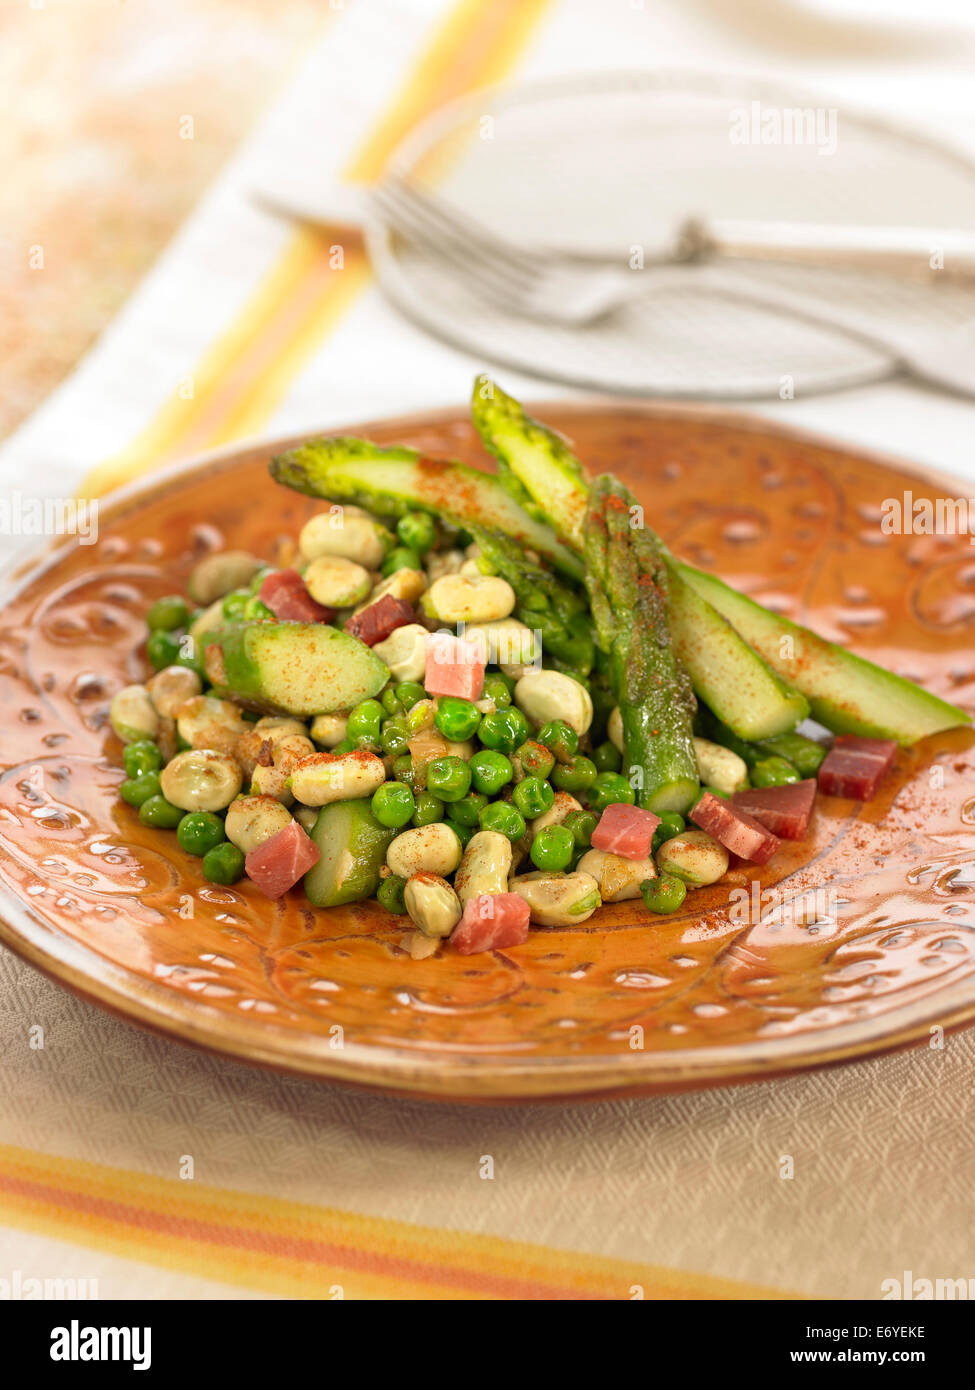 Pea,asparagus and bean stir-fry Stock Photo